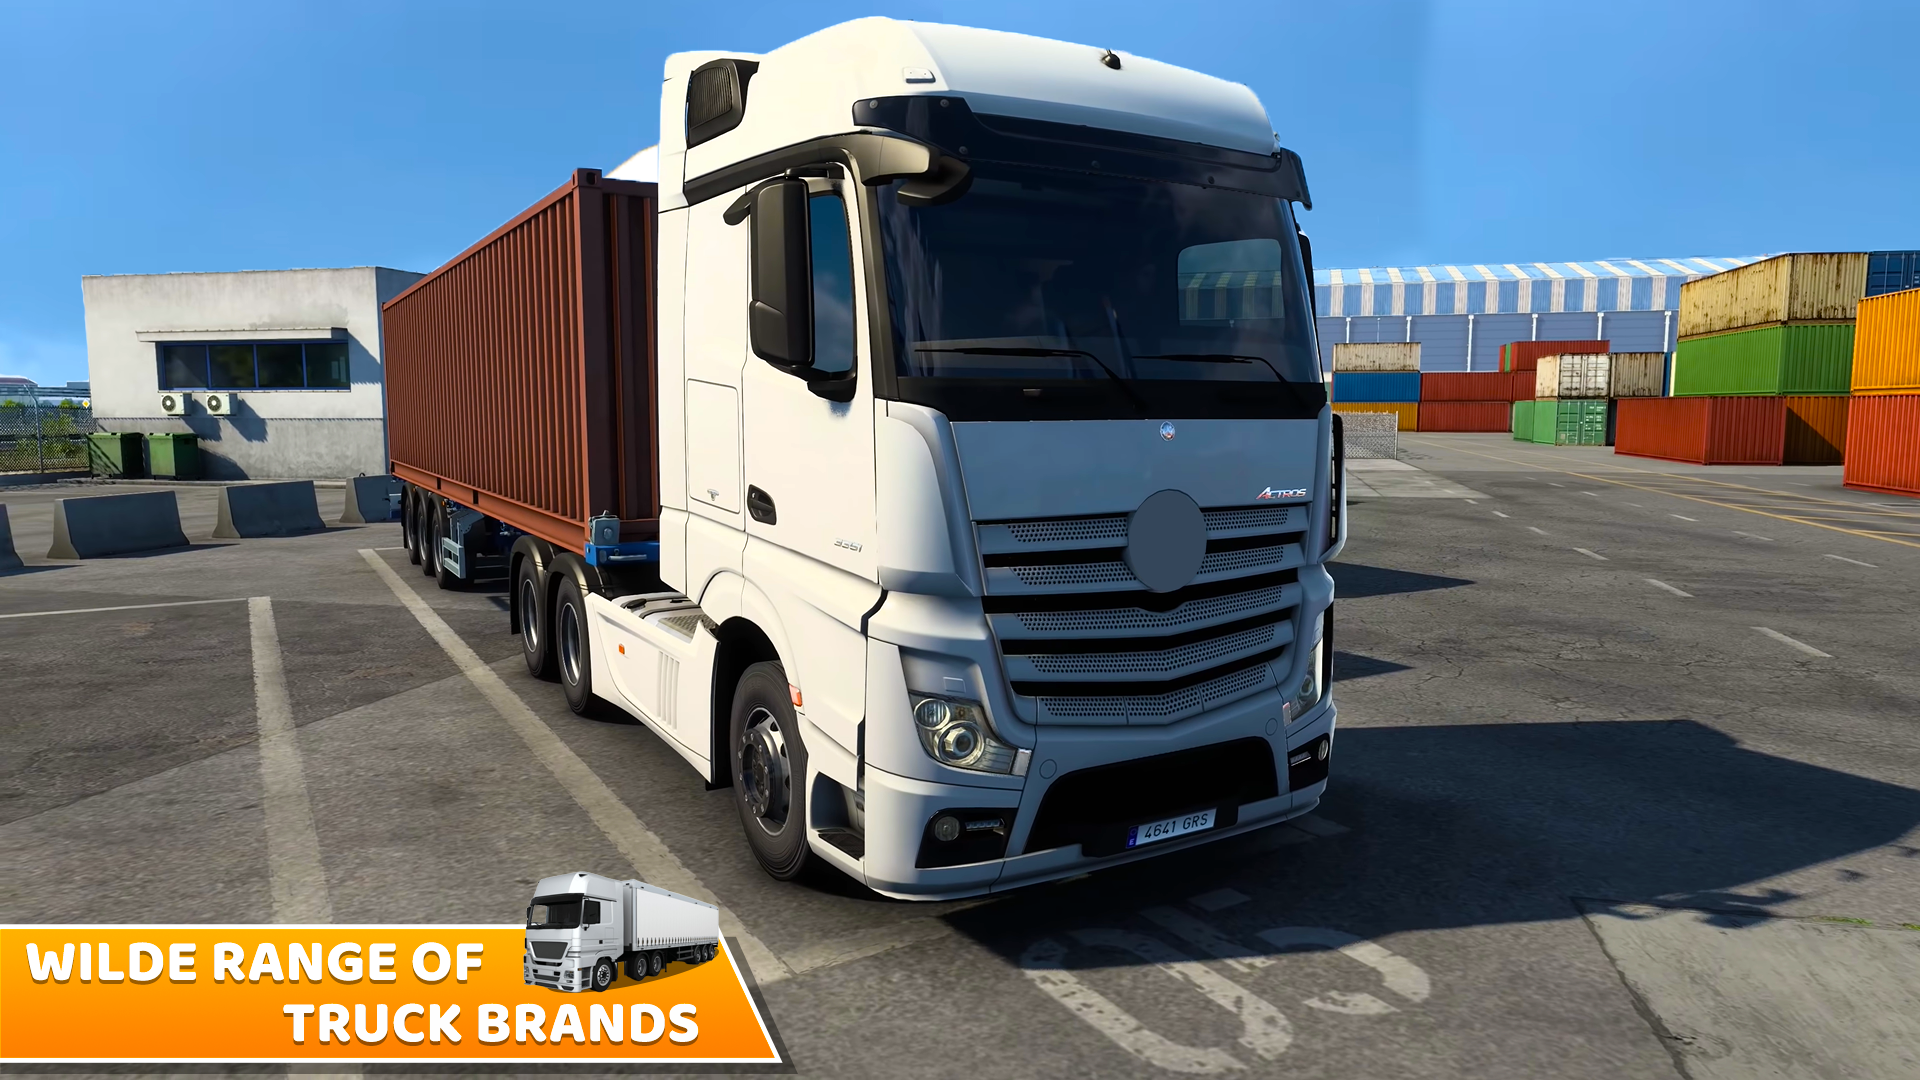 Euro Truck Simulator 2 Games